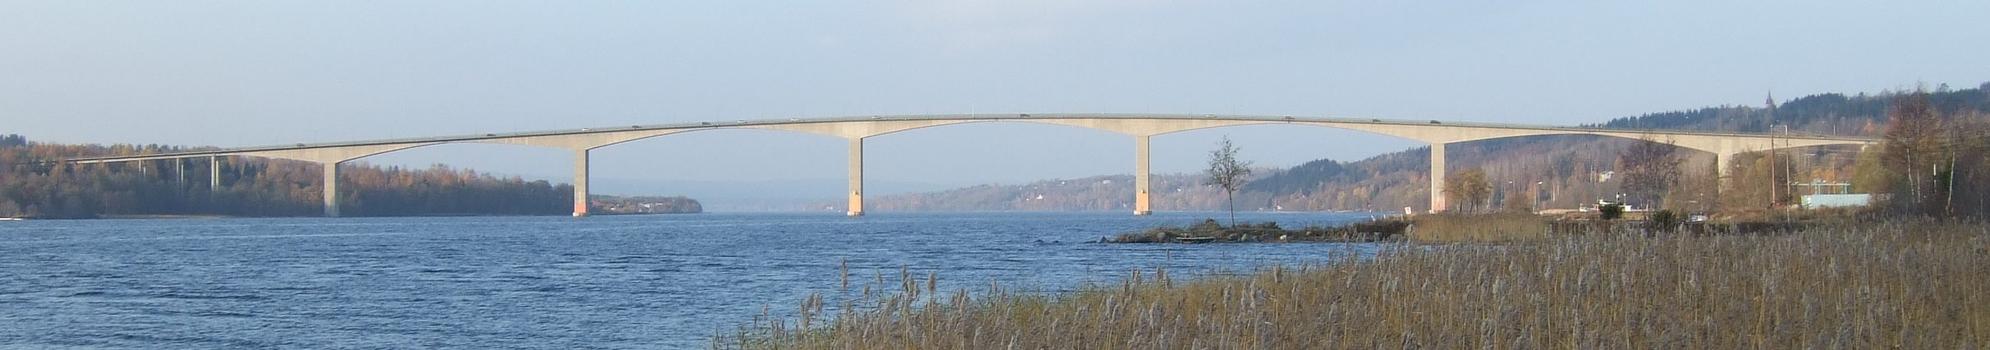 Alnö-Brücke in Sundsvall, Schweden